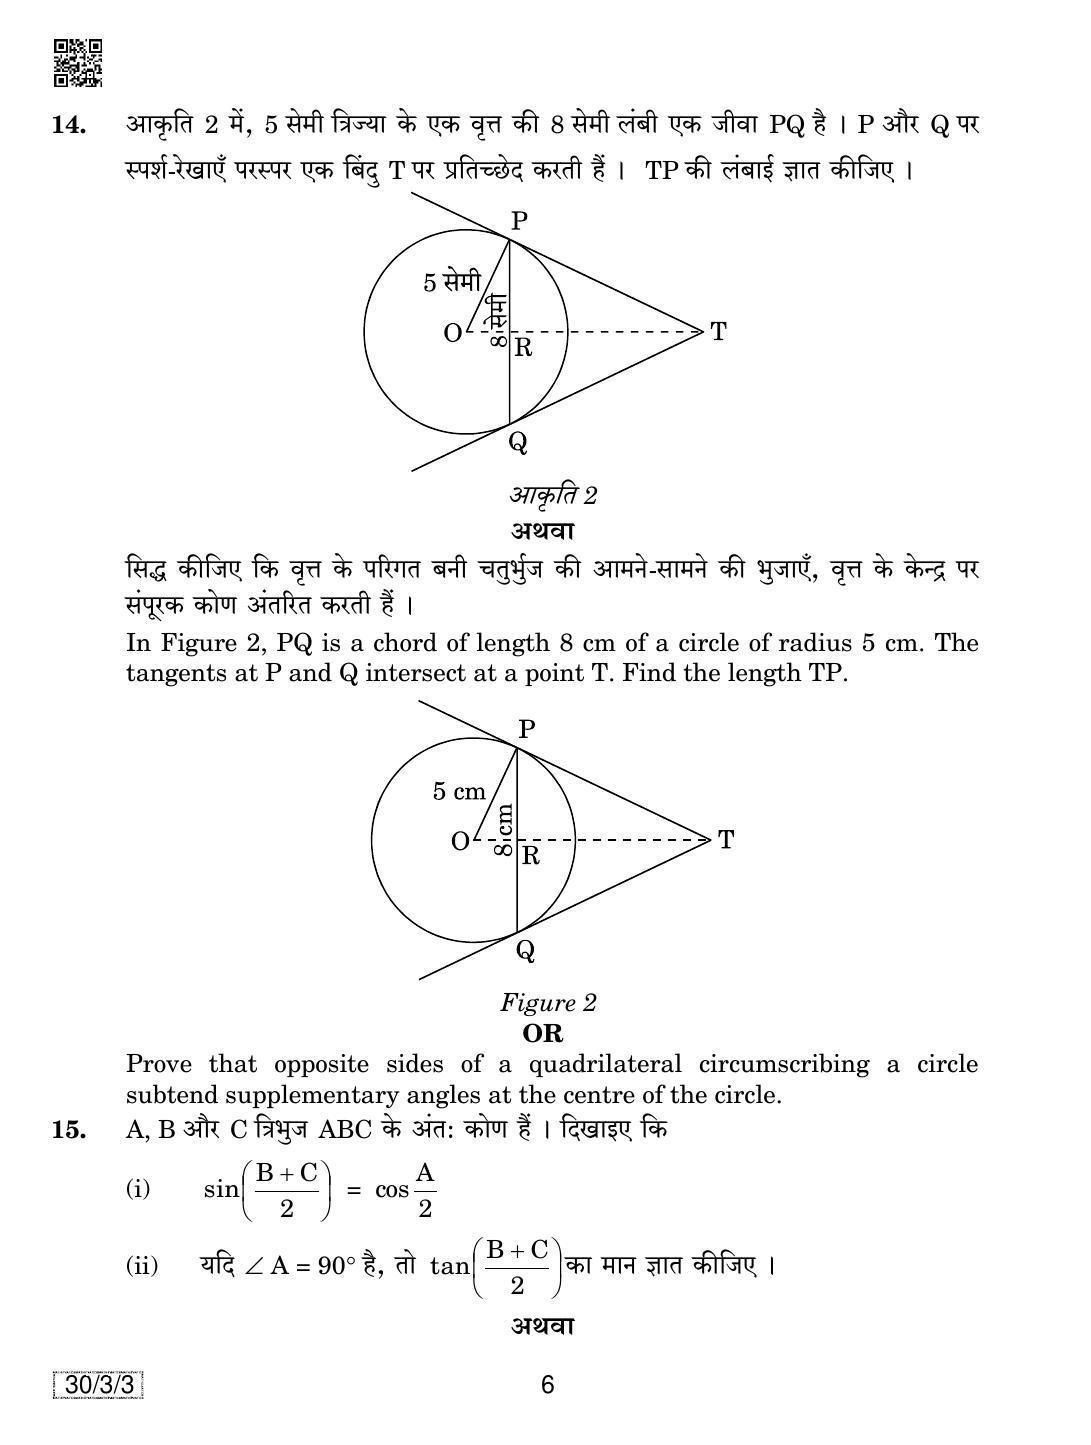 CBSE Class 10 Maths (30/3/3 - SET 3) 2019 Question Paper - Page 6